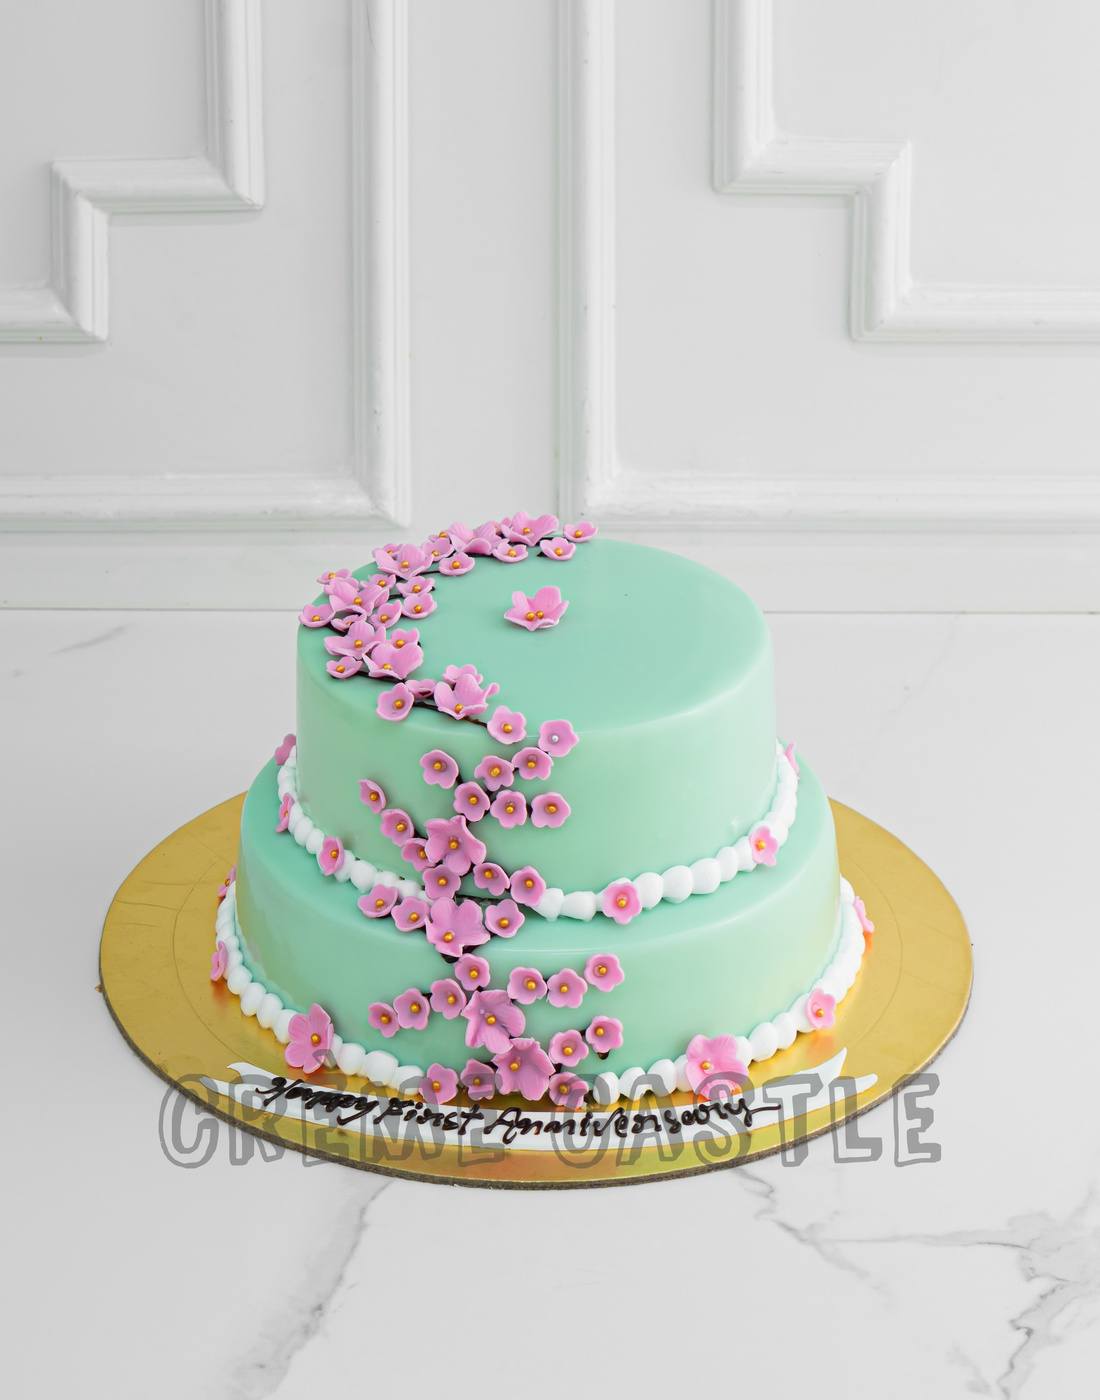 Cherry blossom cake! - Decorated Cake by Silvia Caballero - CakesDecor